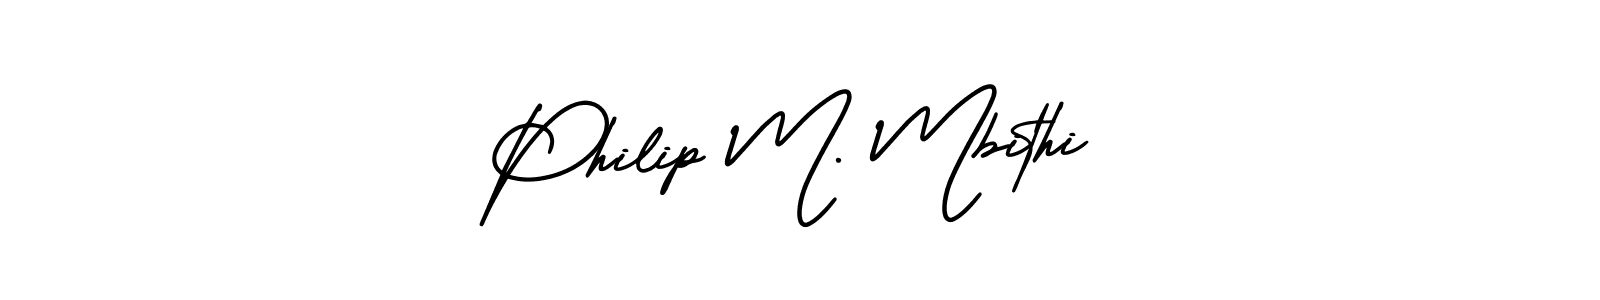 How to Draw Philip M. Mbithi signature style? AmerikaSignatureDemo-Regular is a latest design signature styles for name Philip M. Mbithi. Philip M. Mbithi signature style 3 images and pictures png